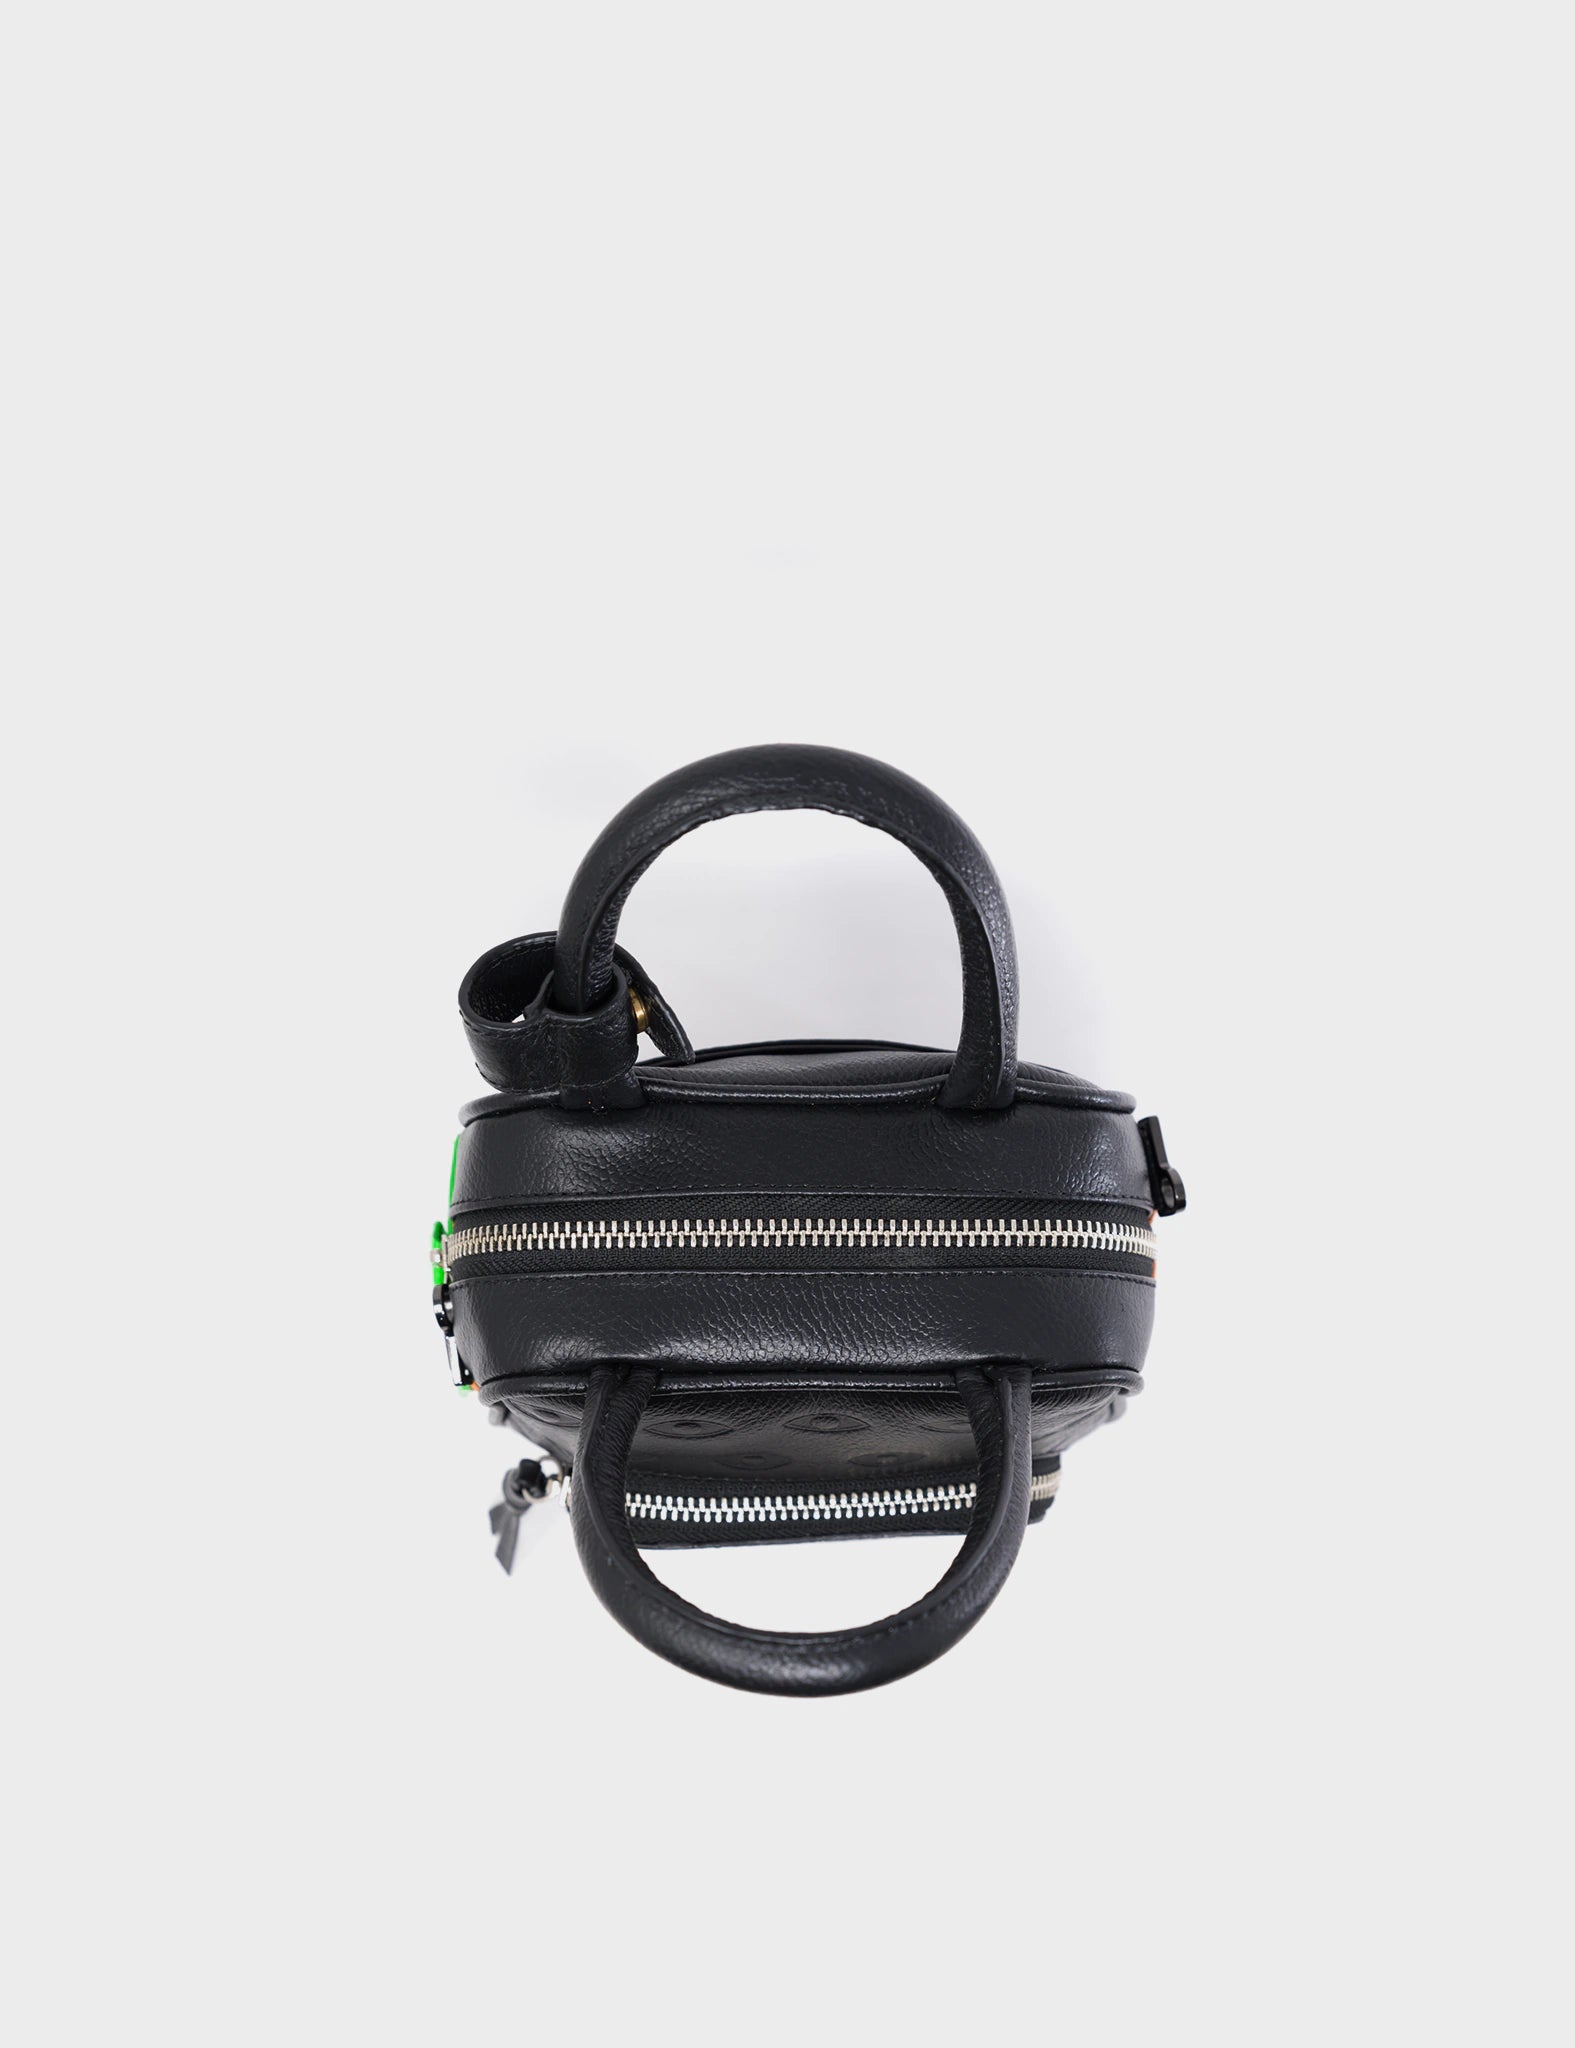 Marino Mini Crossbody Black Leather Bag - Eyes Pattern Debossed - Top